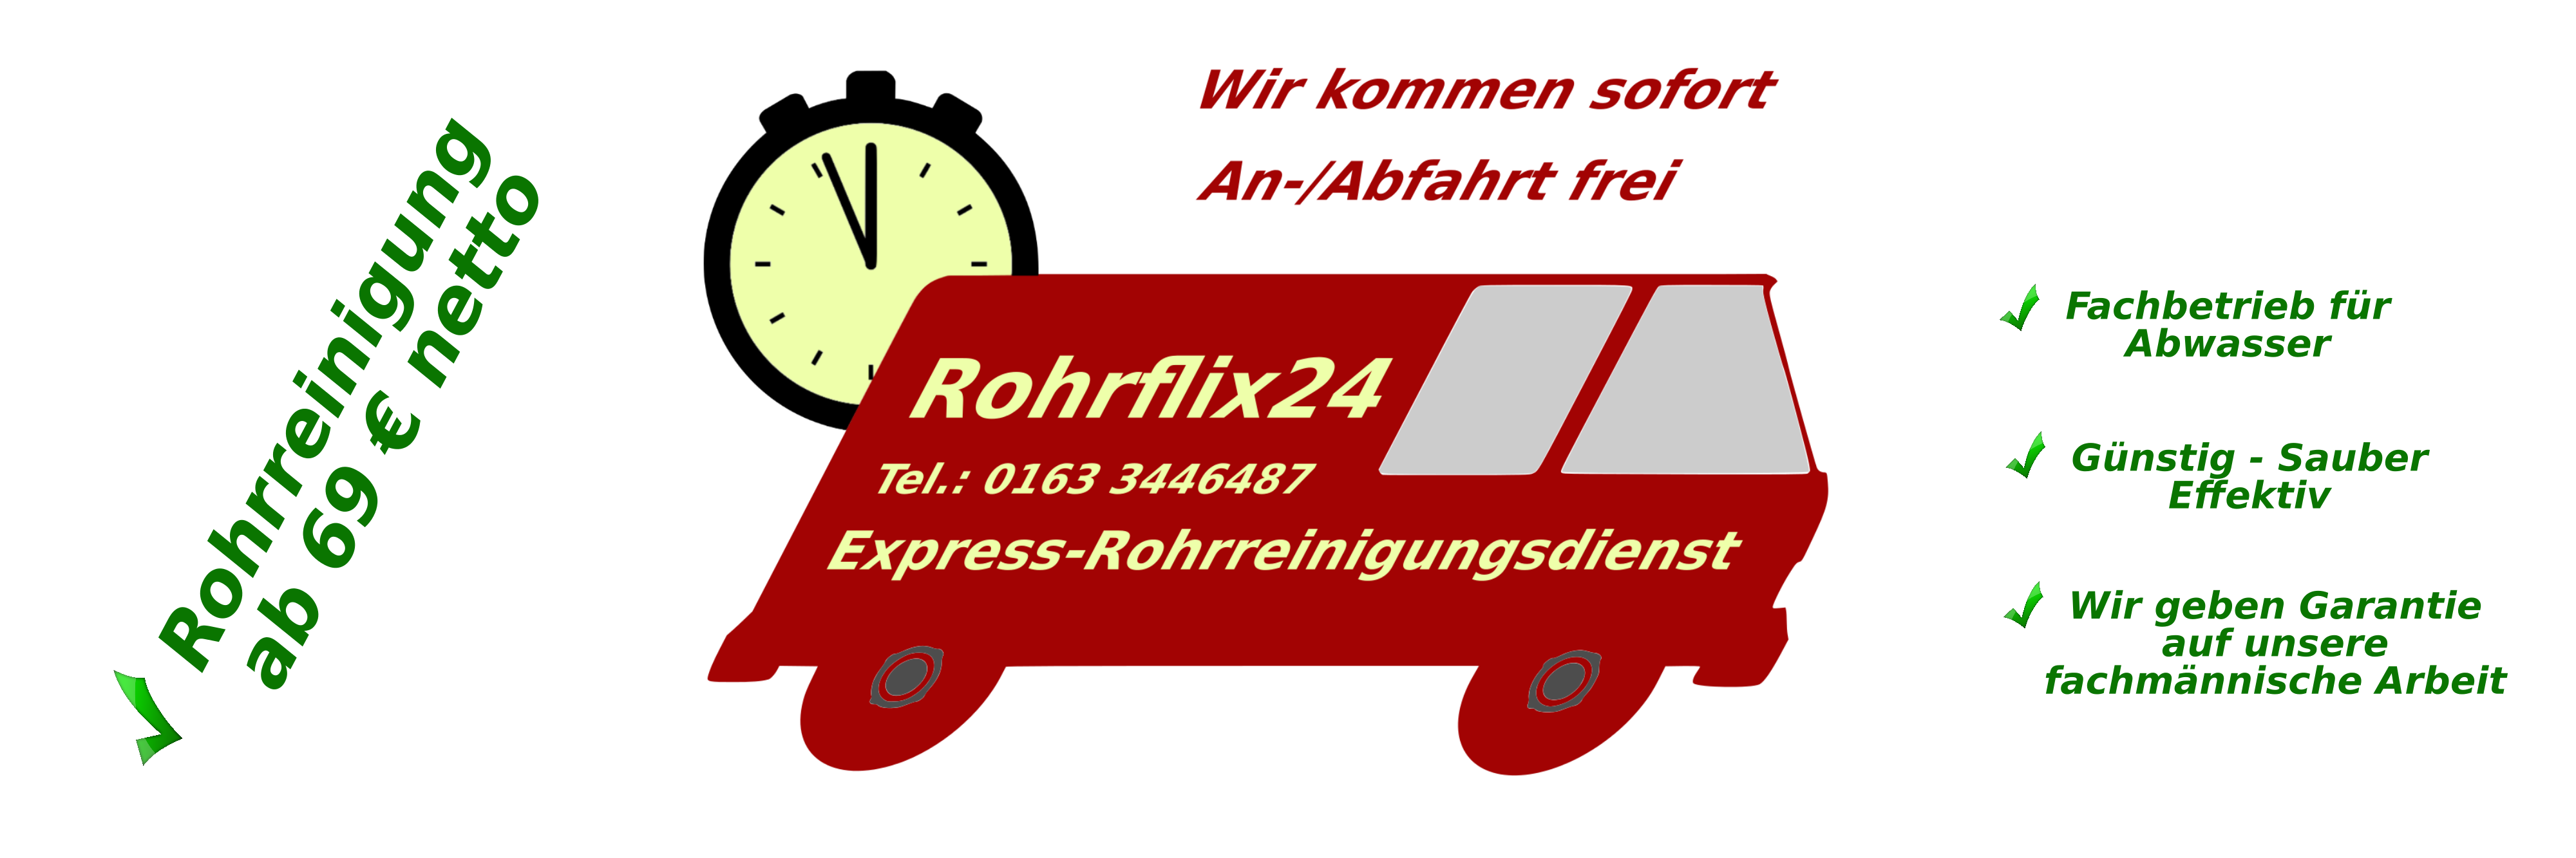 rohrflix24